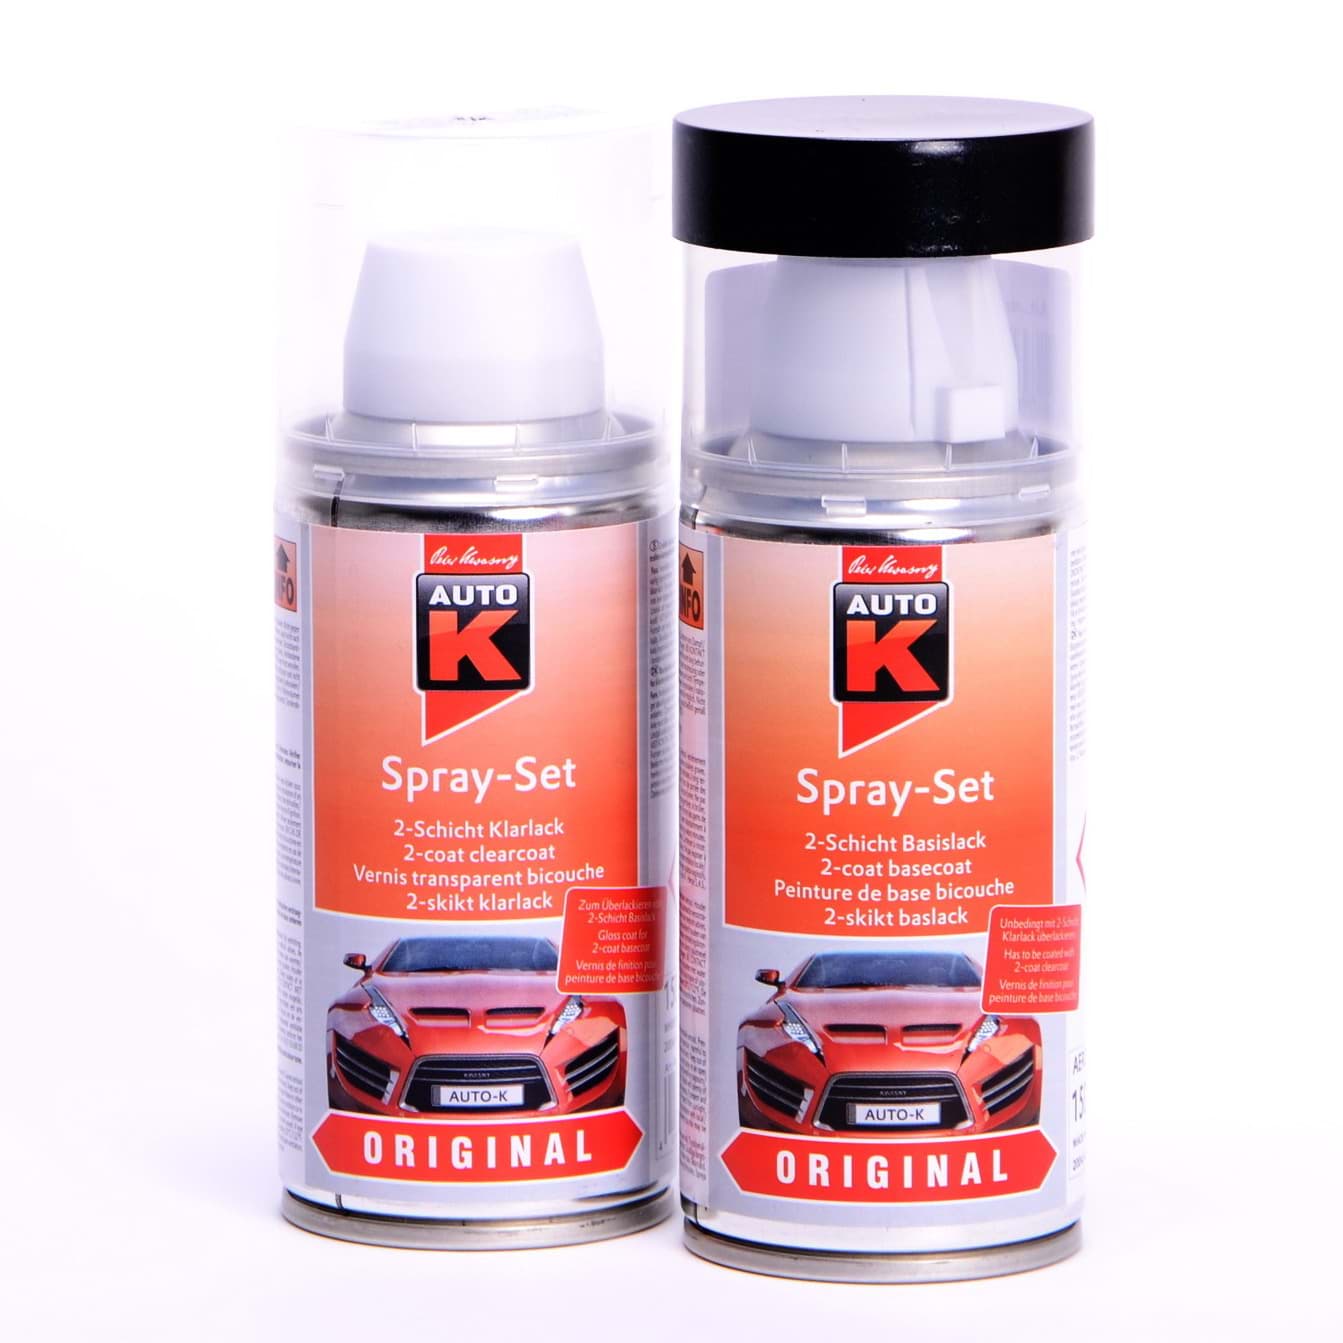 Auto-K Spray-Set Autolack für Opel 2HU Saphirschwarz met 21465 resmi